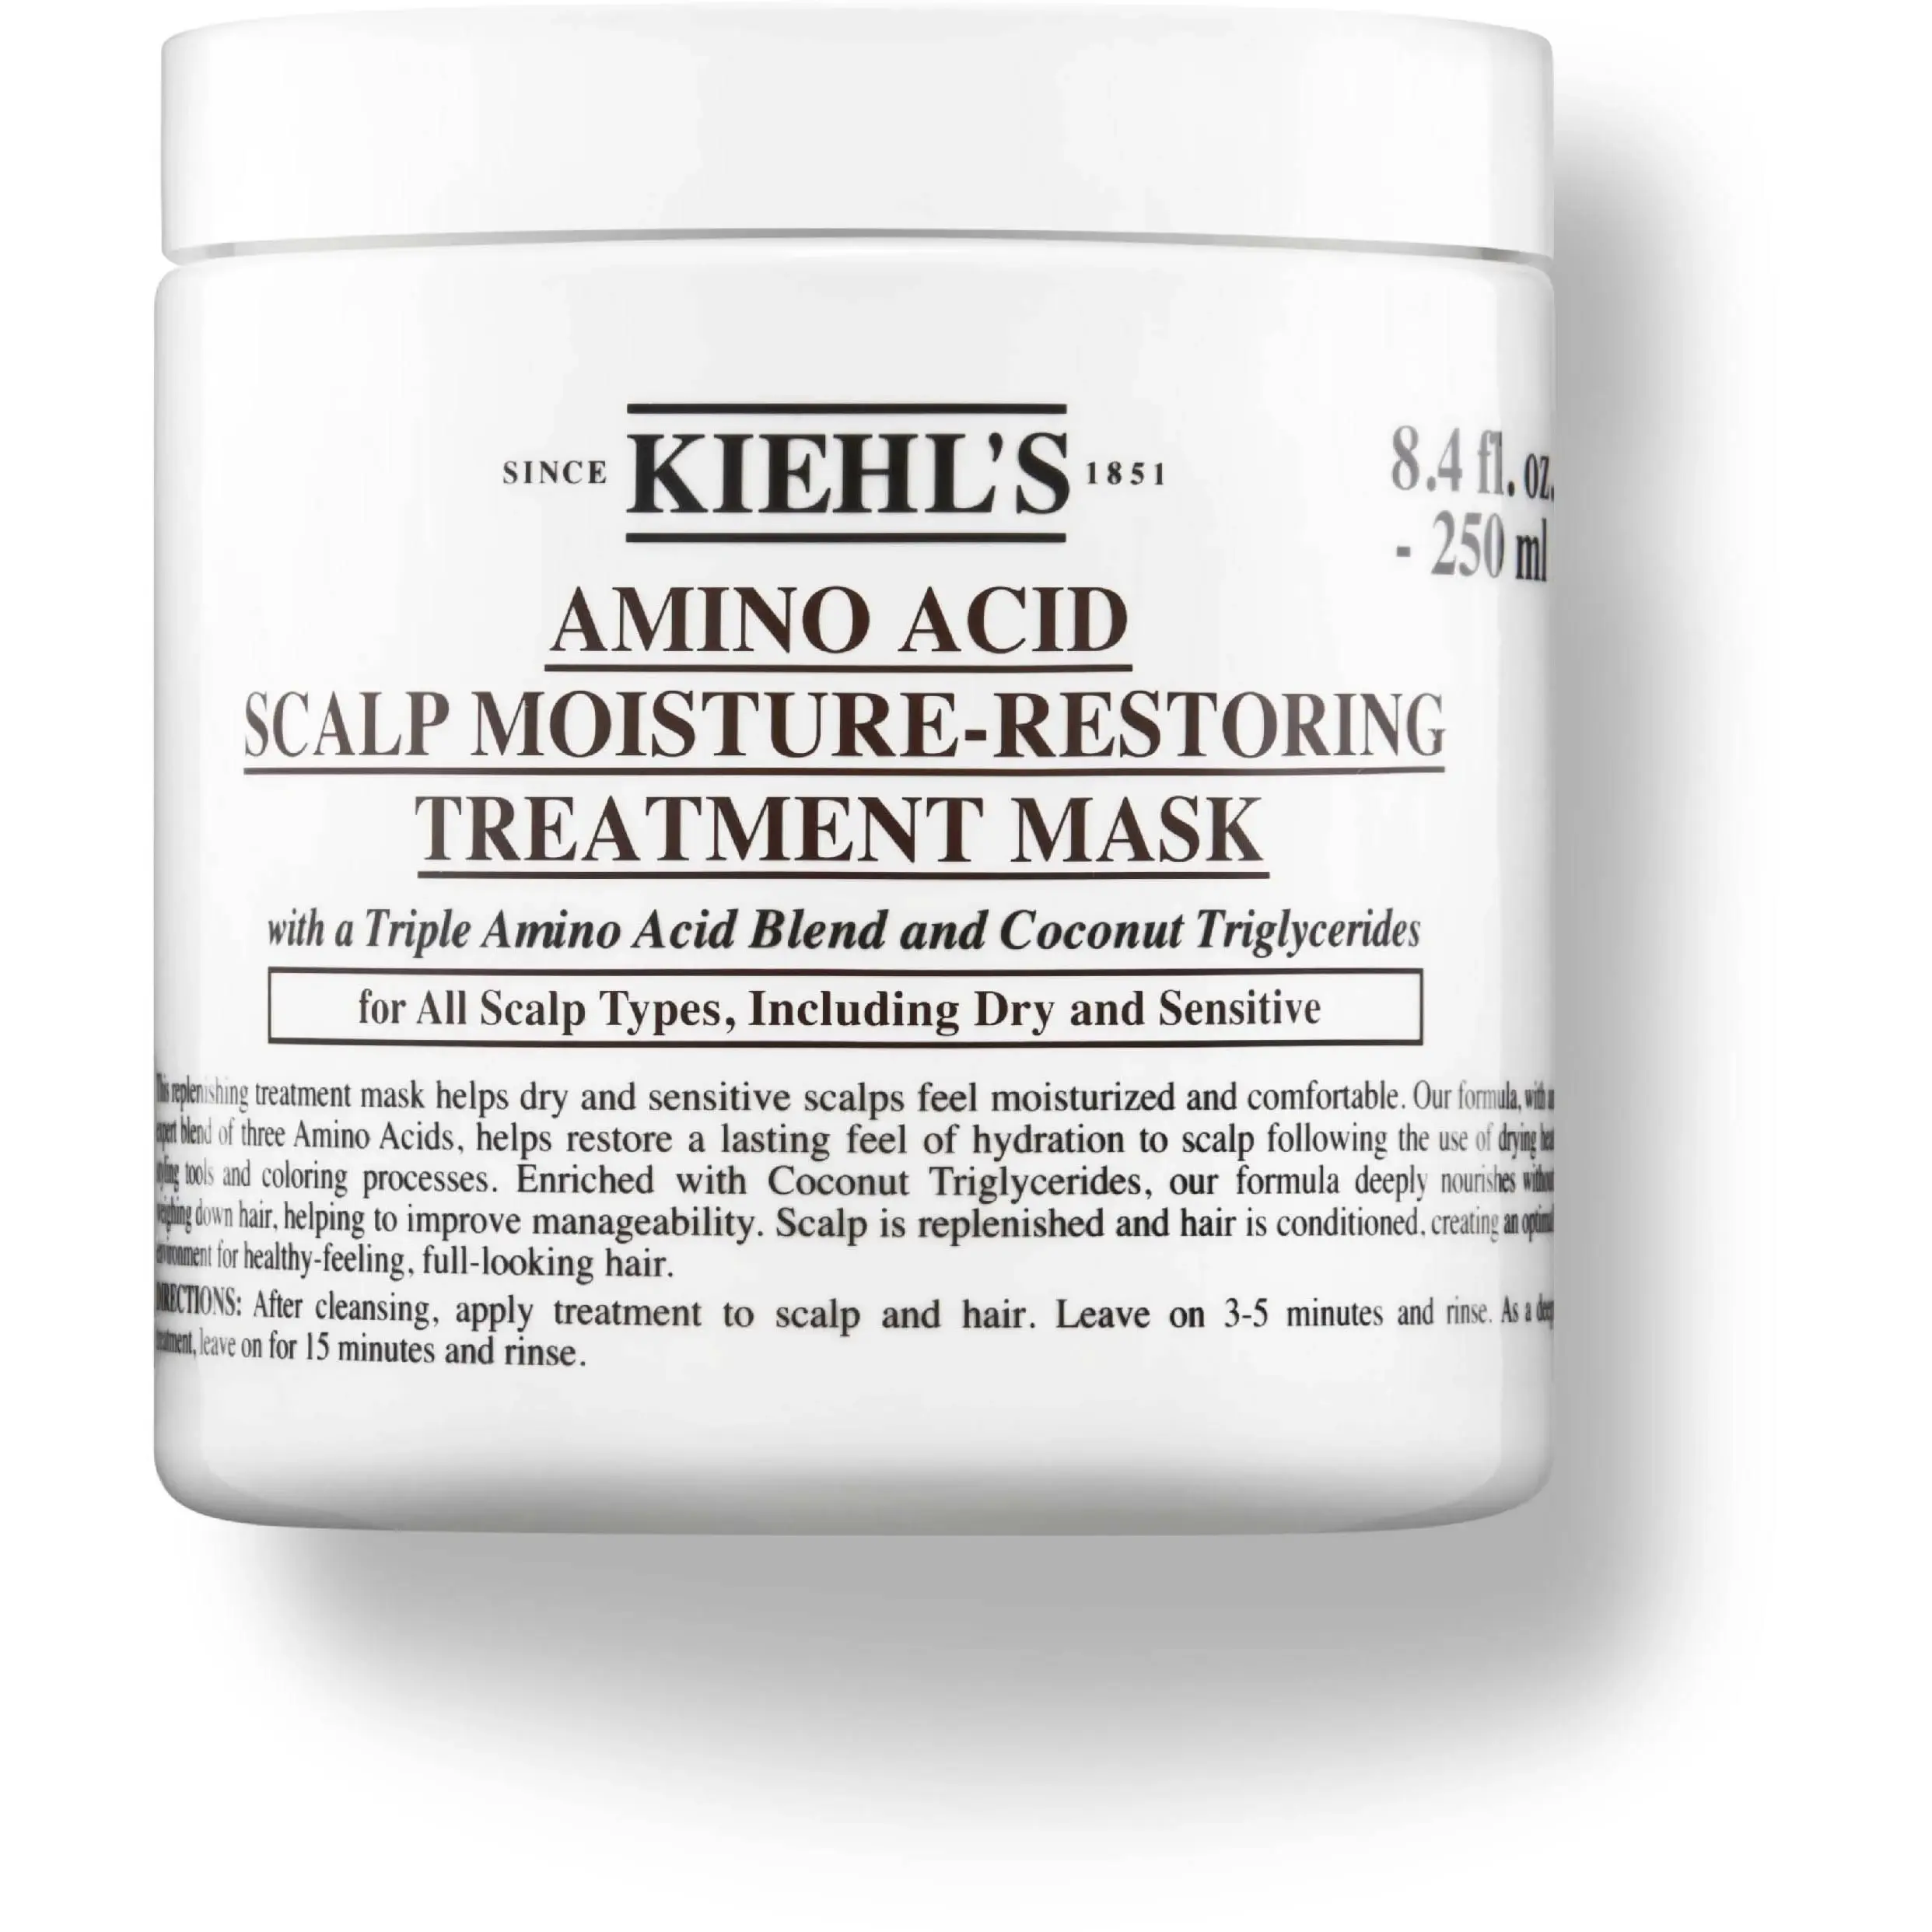 Kiehl's Amino Acid Scalp Moisture-Restoring Treatment Mask (250 ml)